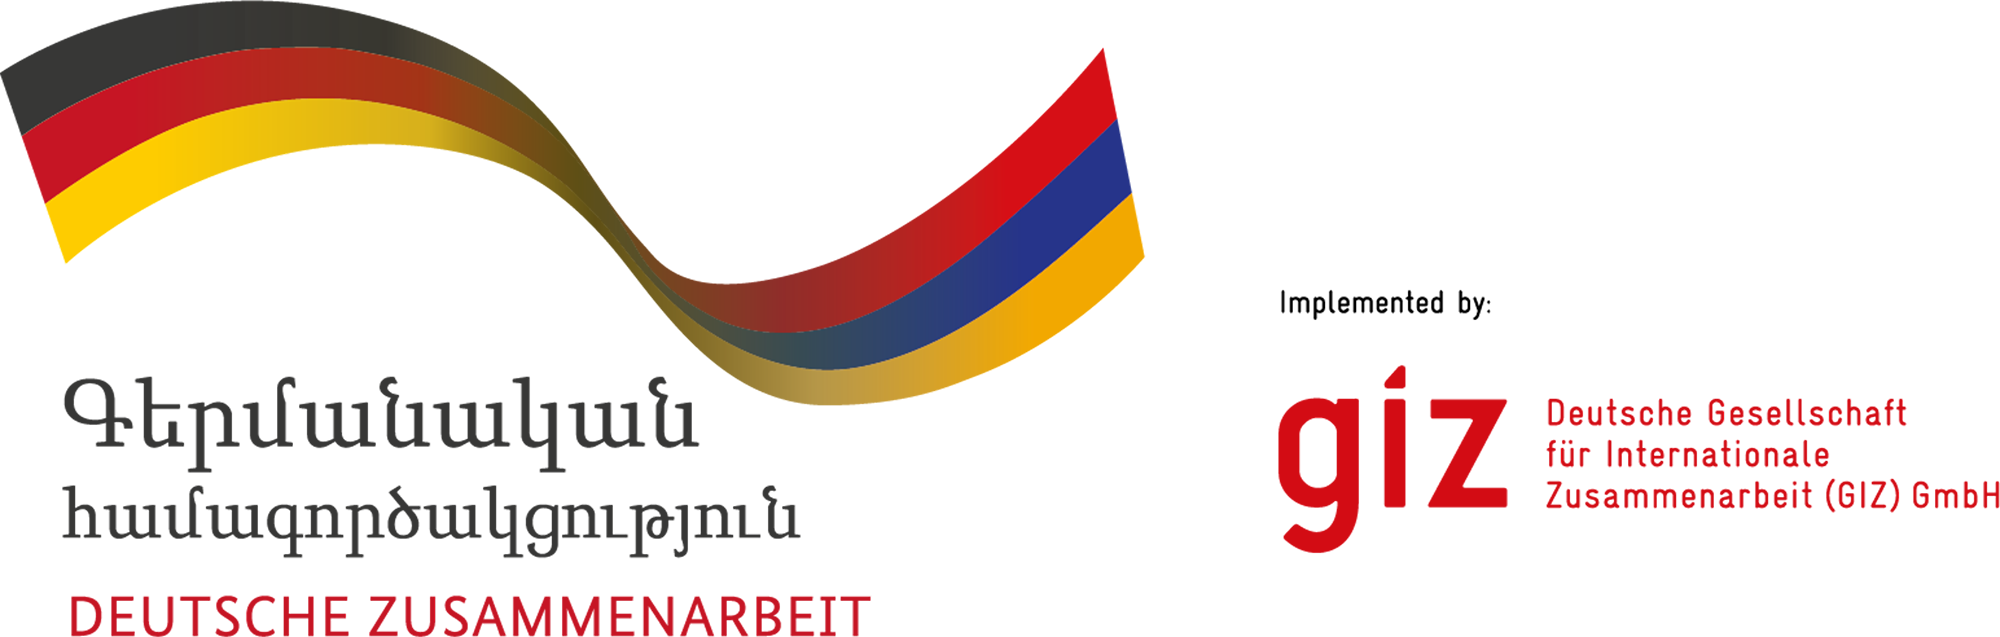 GIZ's EU4Business “Innovative Tourism and Technology Development for Armenia” (ITTD) project